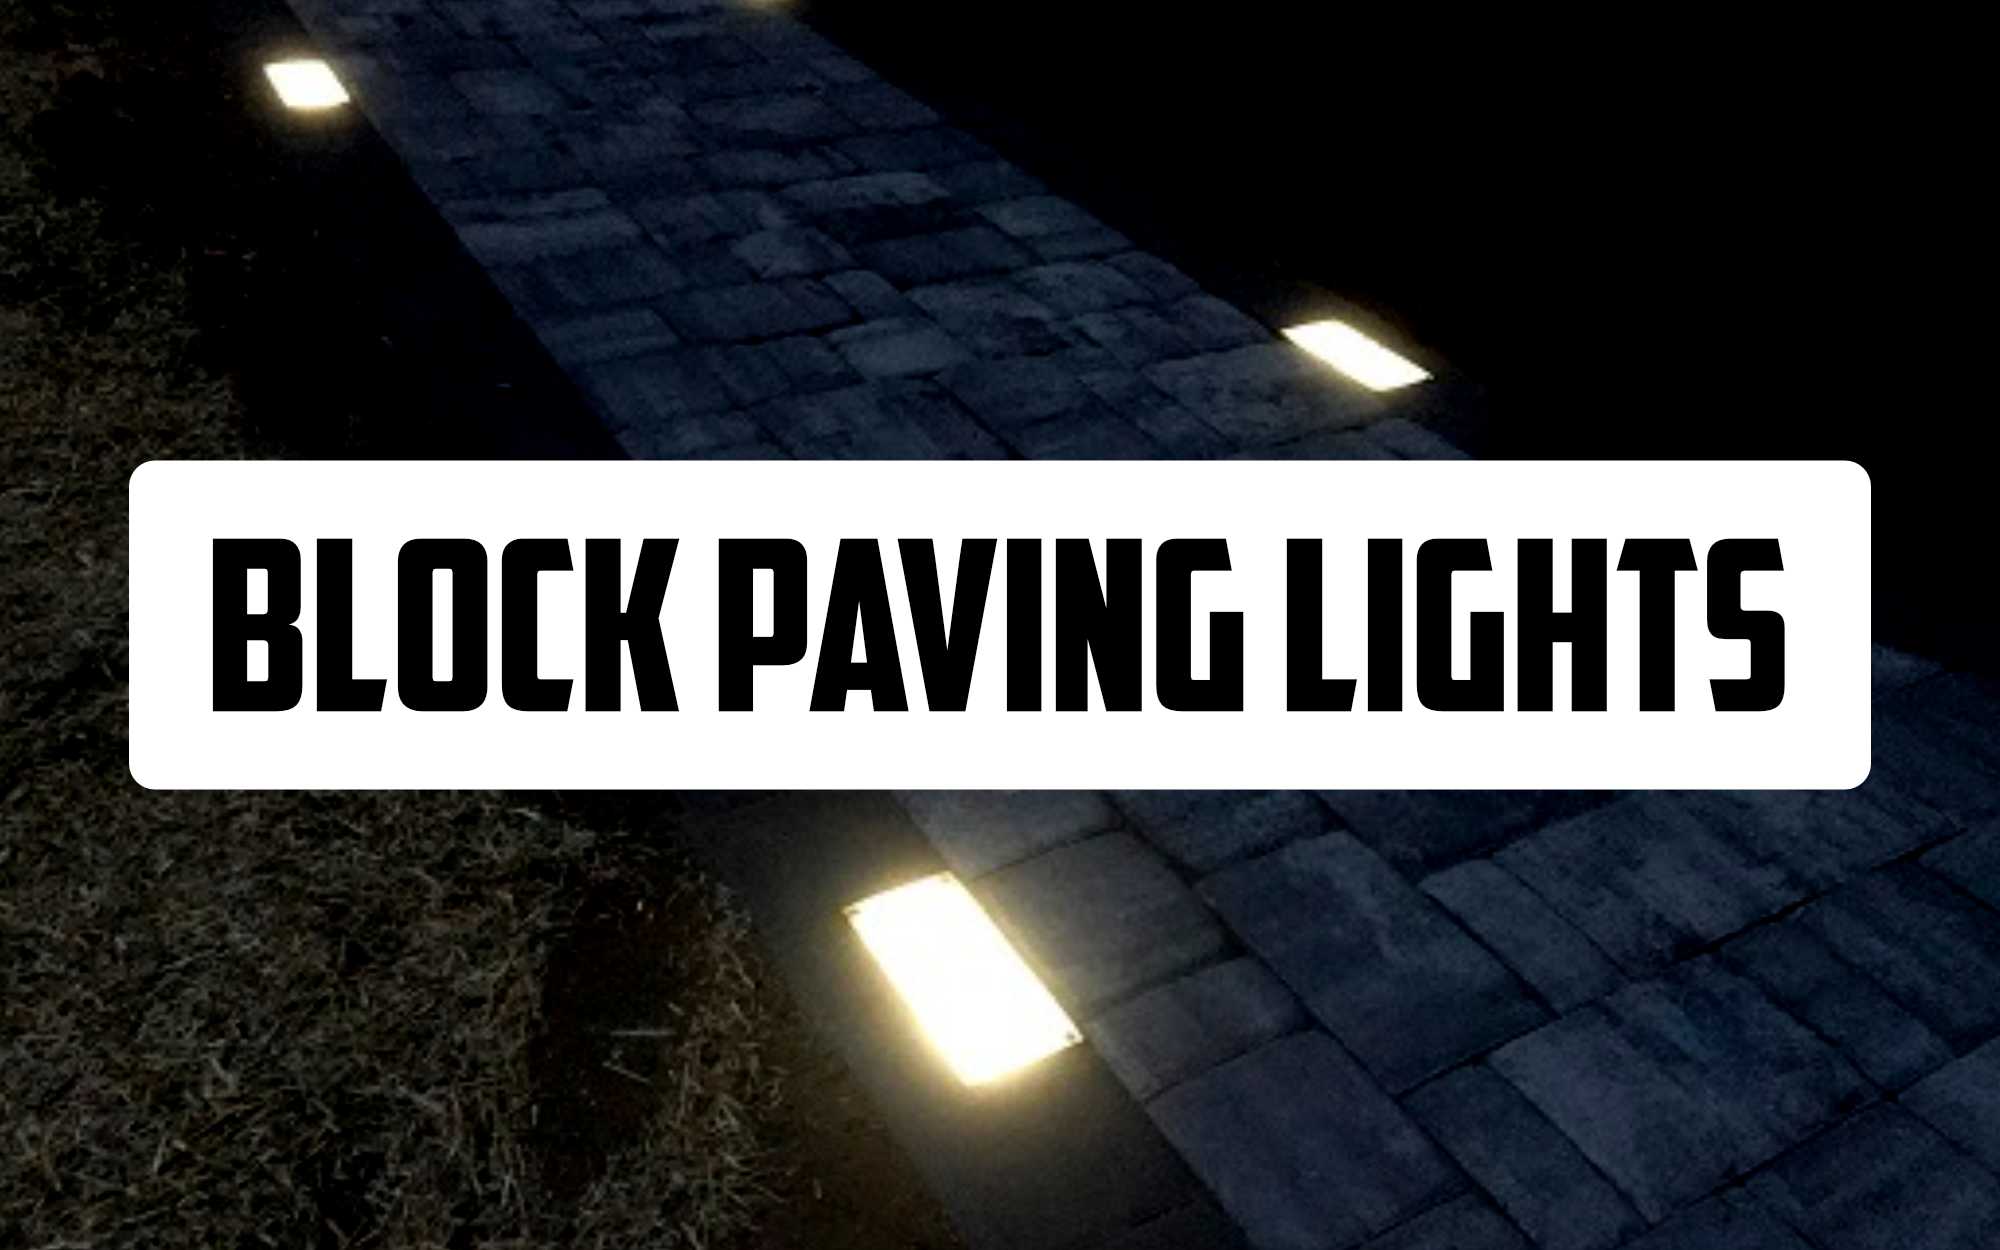 Article photo showing block paving lights illuminated on a driveway